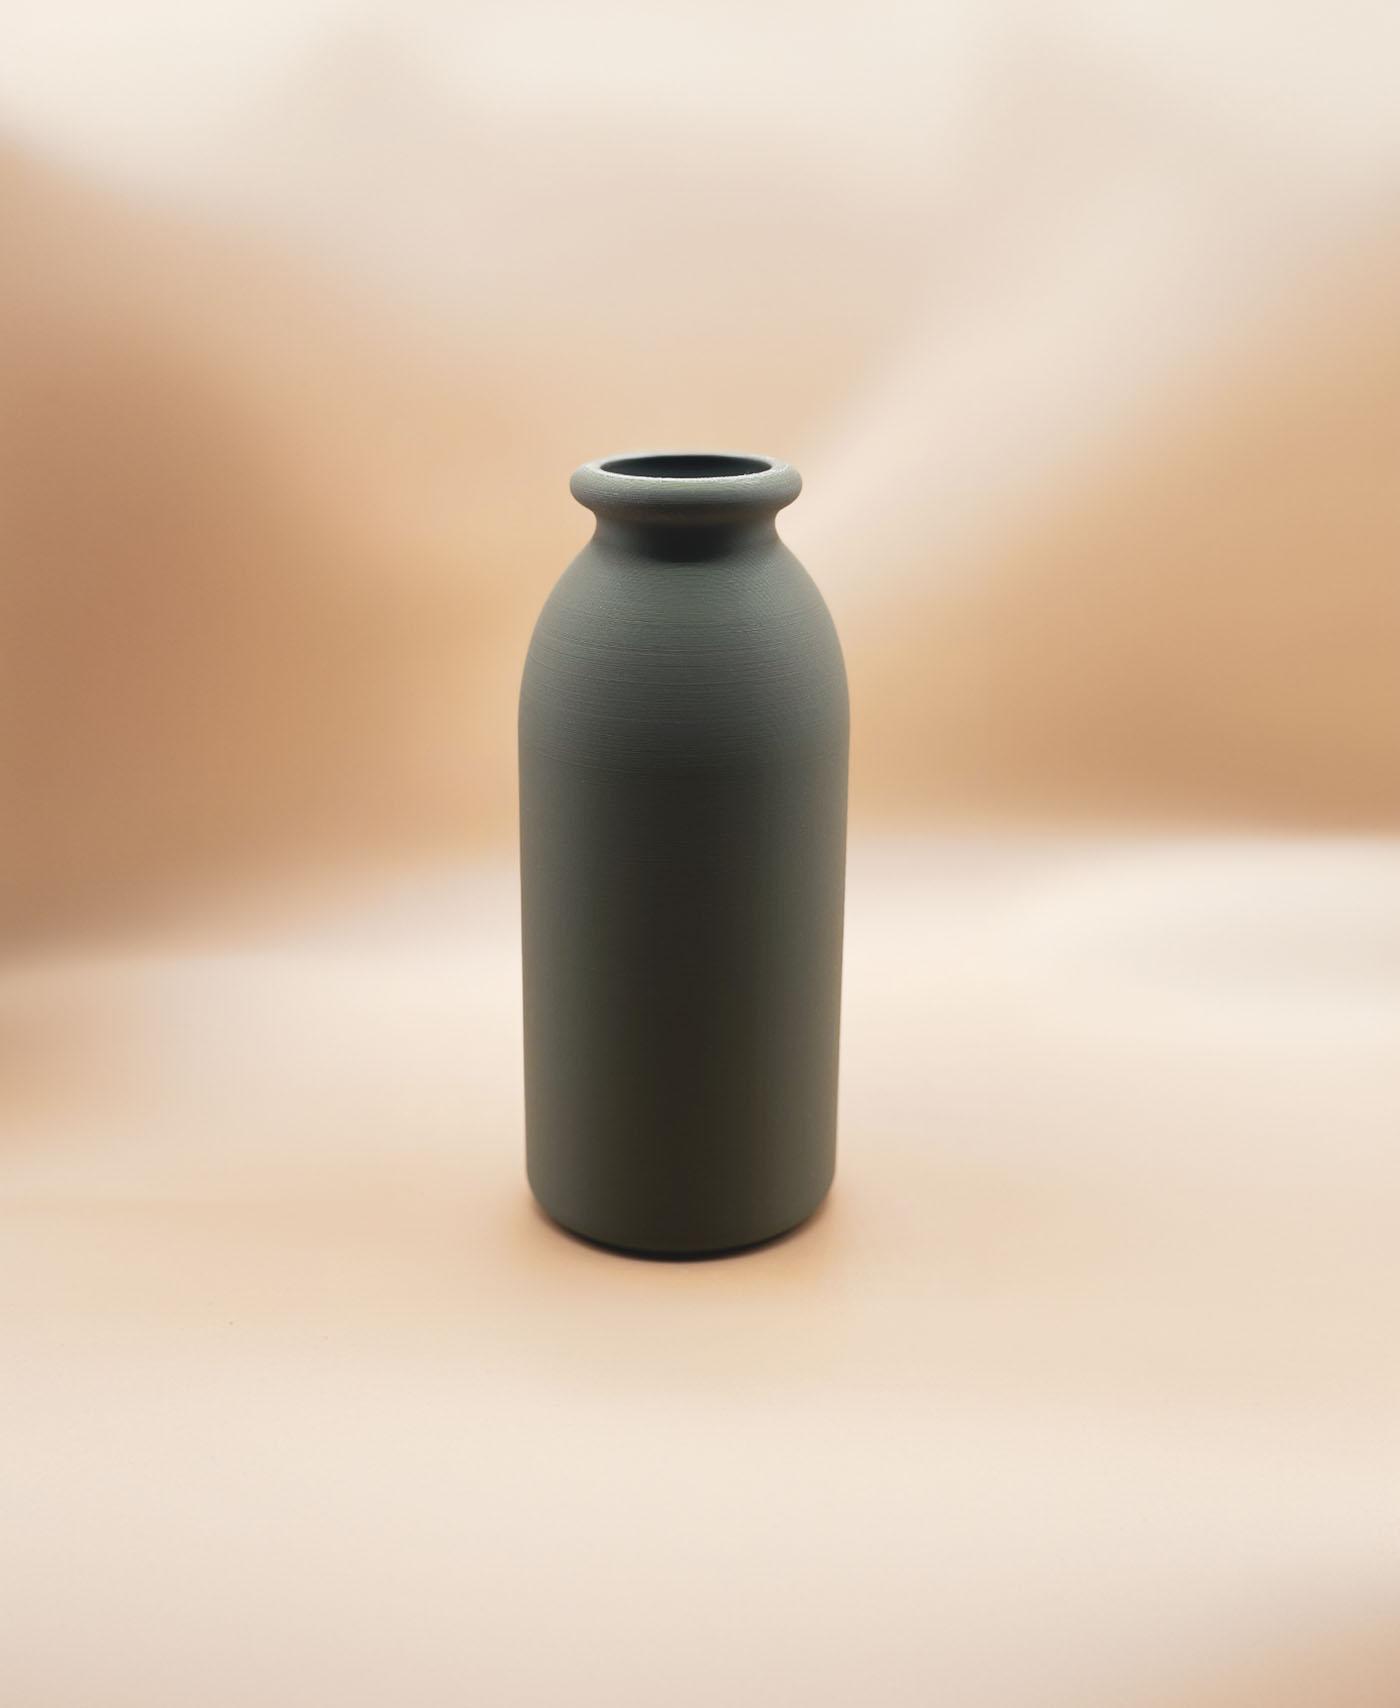 Milk Bottle Vase - Three Sizes 3d model